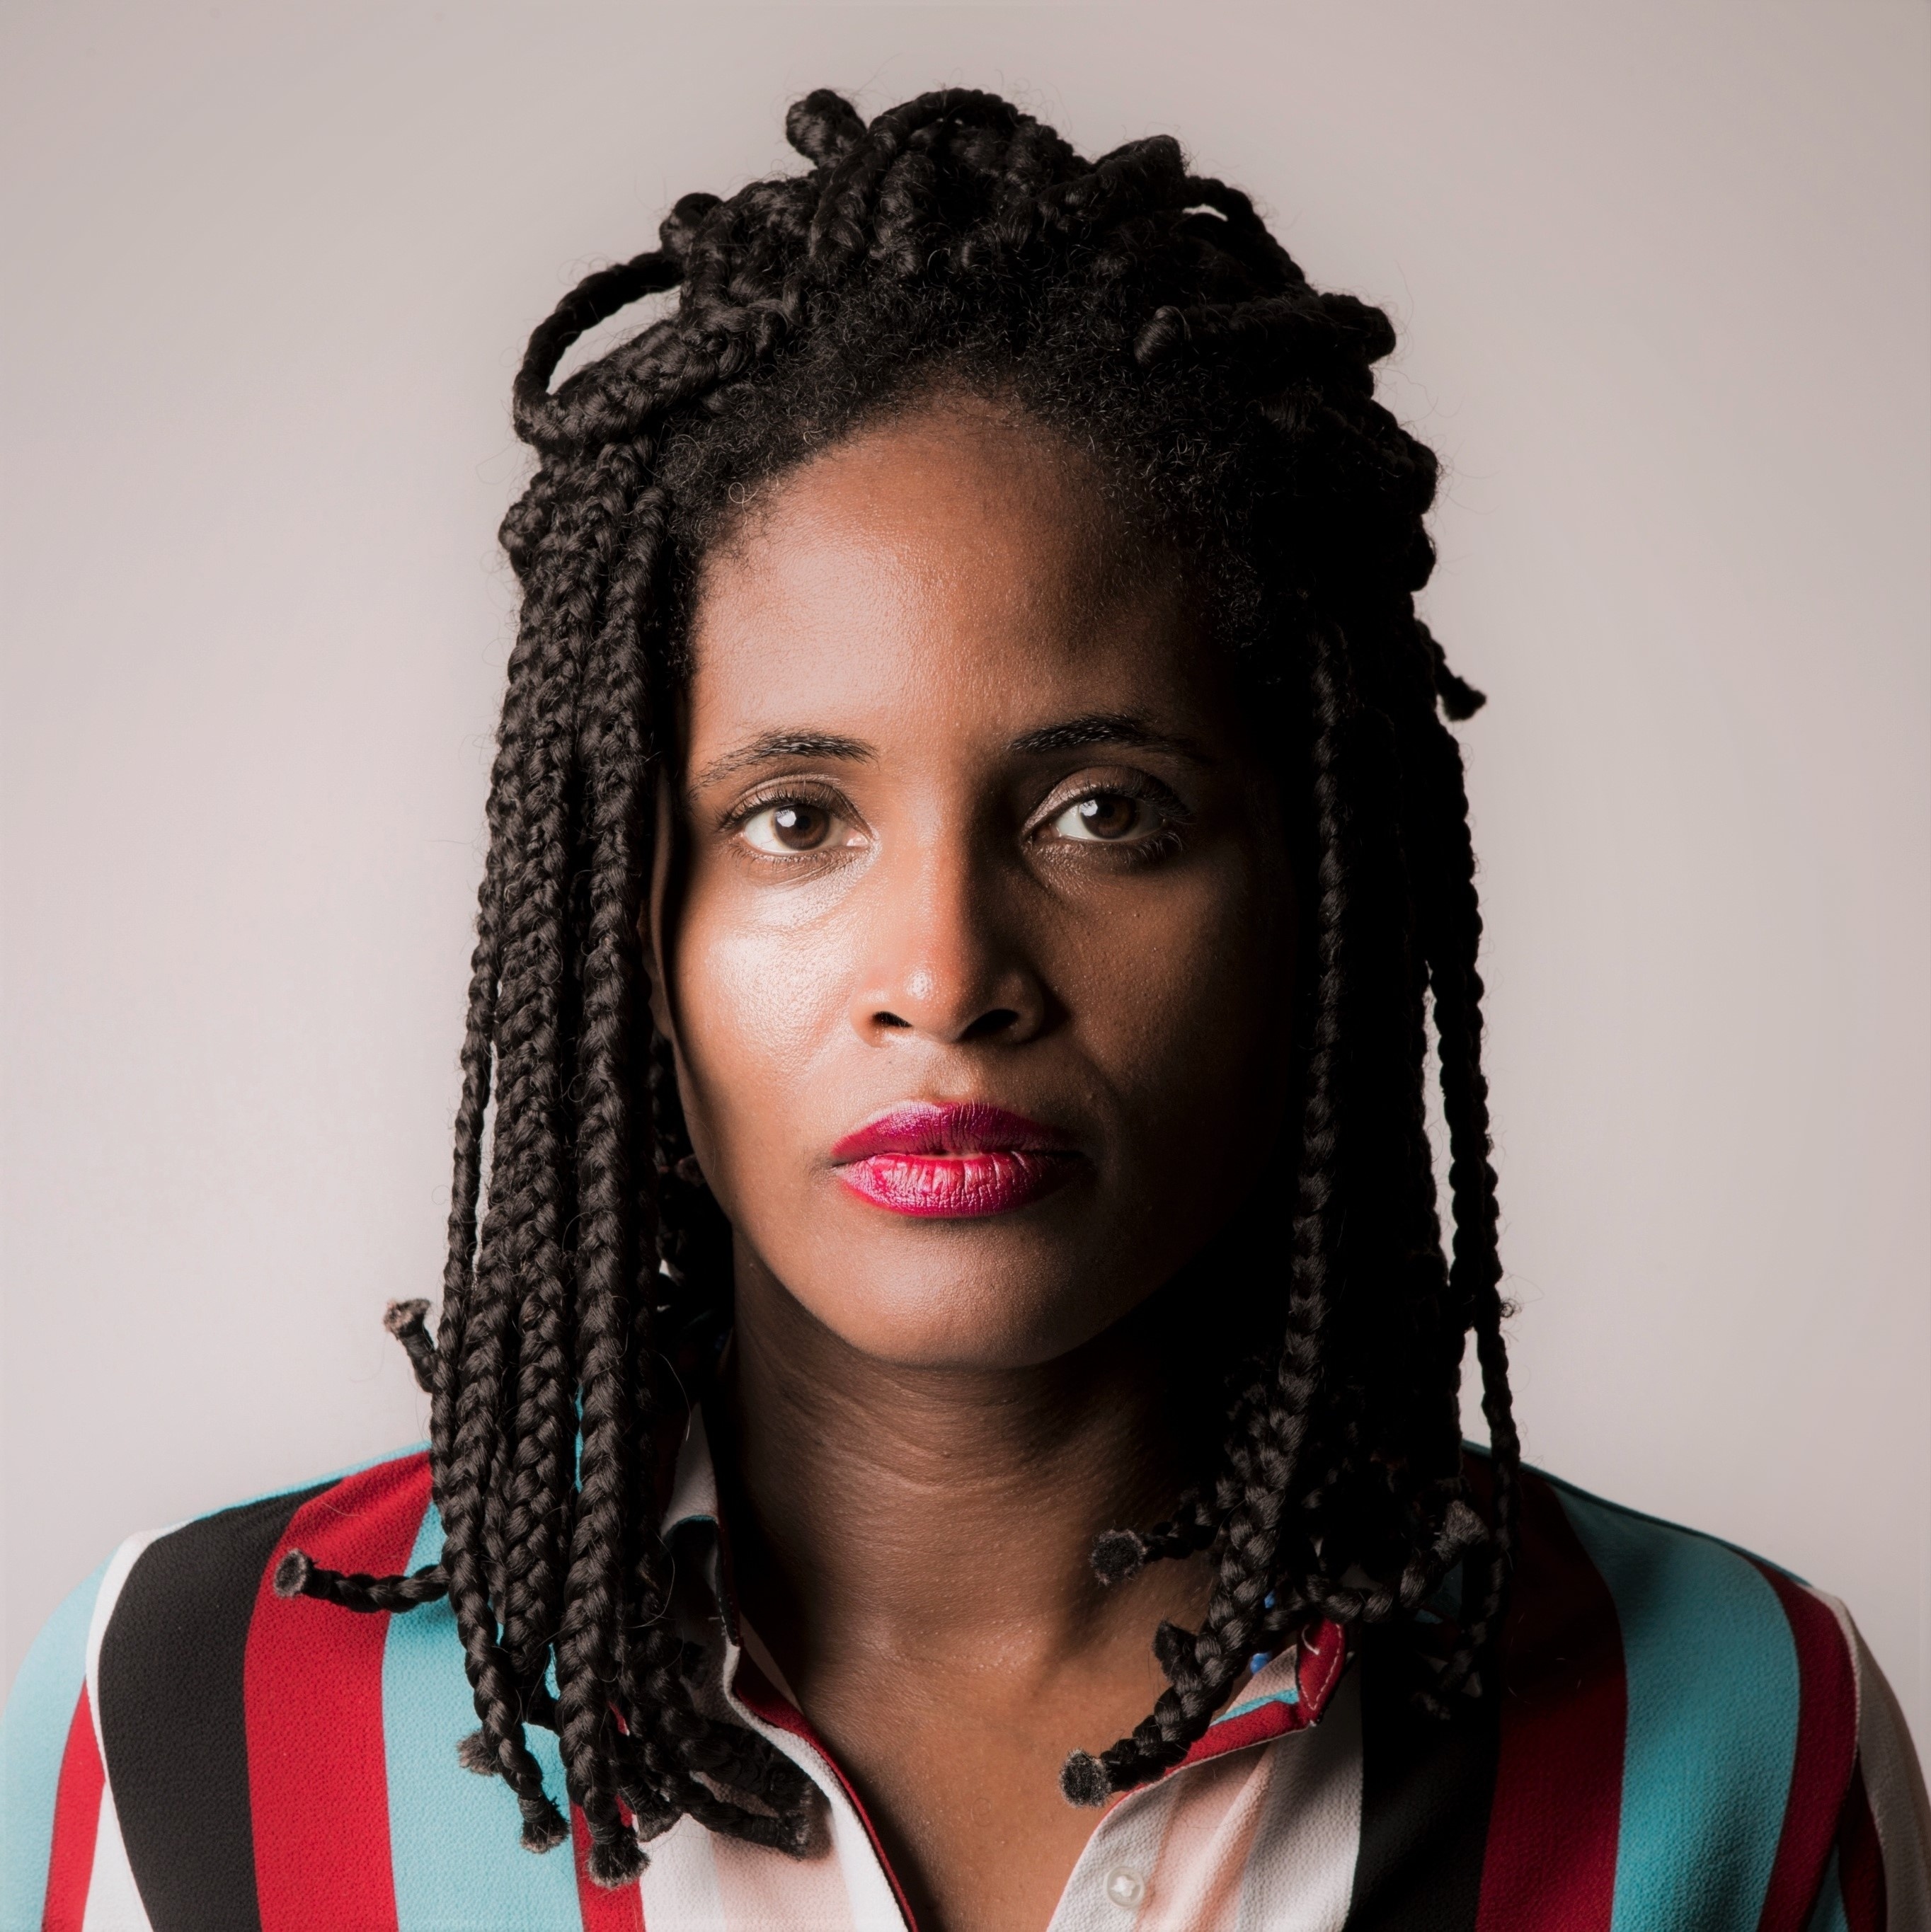 Ain't I a Woman” too?  Djamila Ribeiro on Social Justice, Black